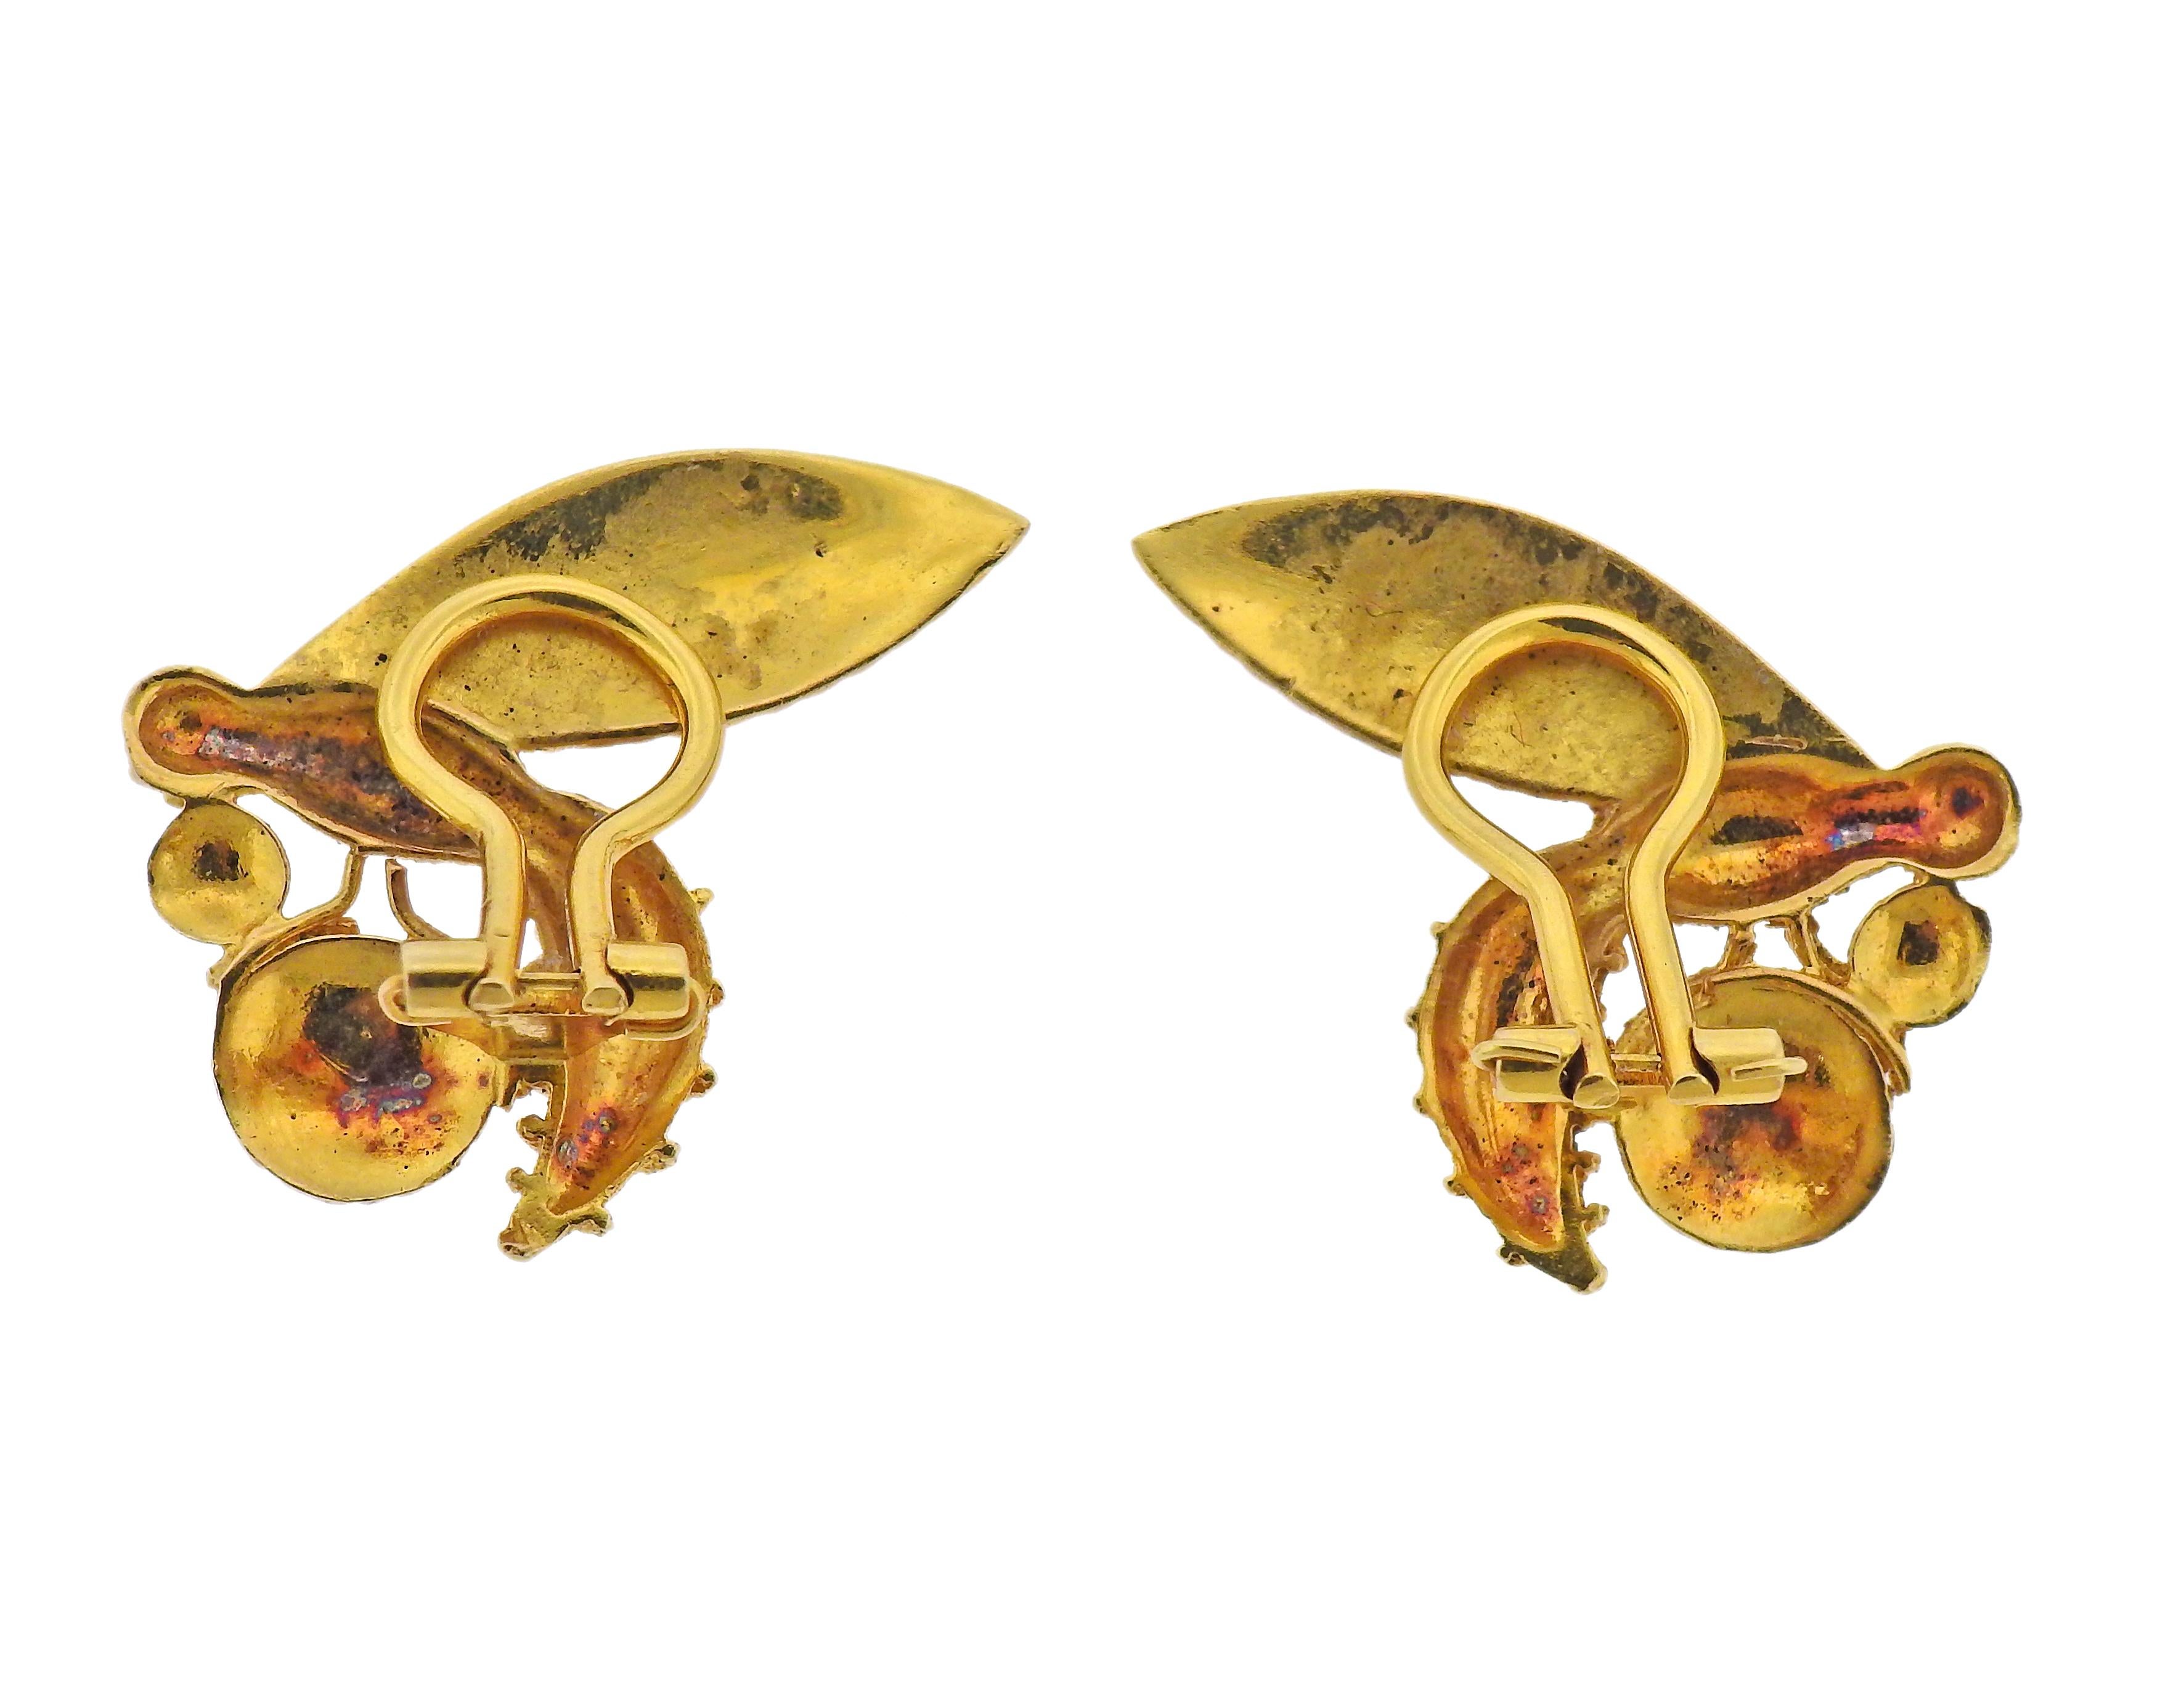 Pair of 18k gold Zolotas earrings, depicting wasps. Earrings measure 28mm x 30mm. Marked: Zolotas, 750, R17. Weight - 13.9 grams. 